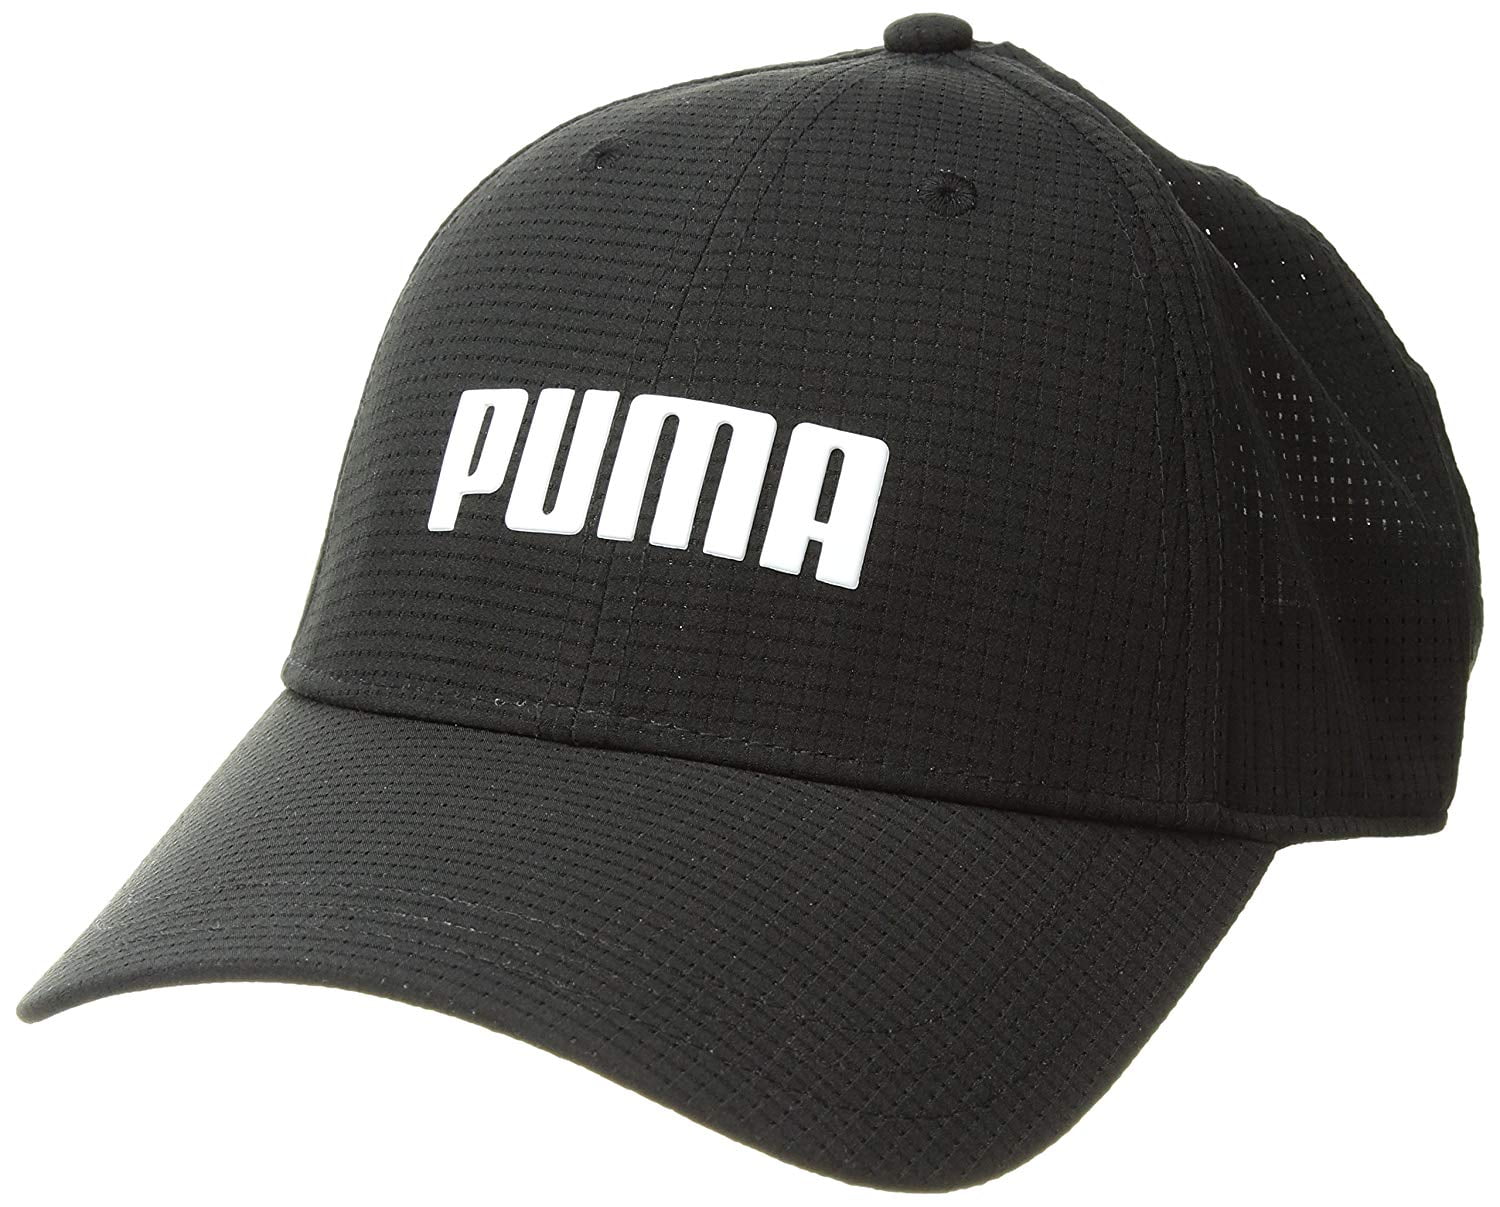 black puma golf hat